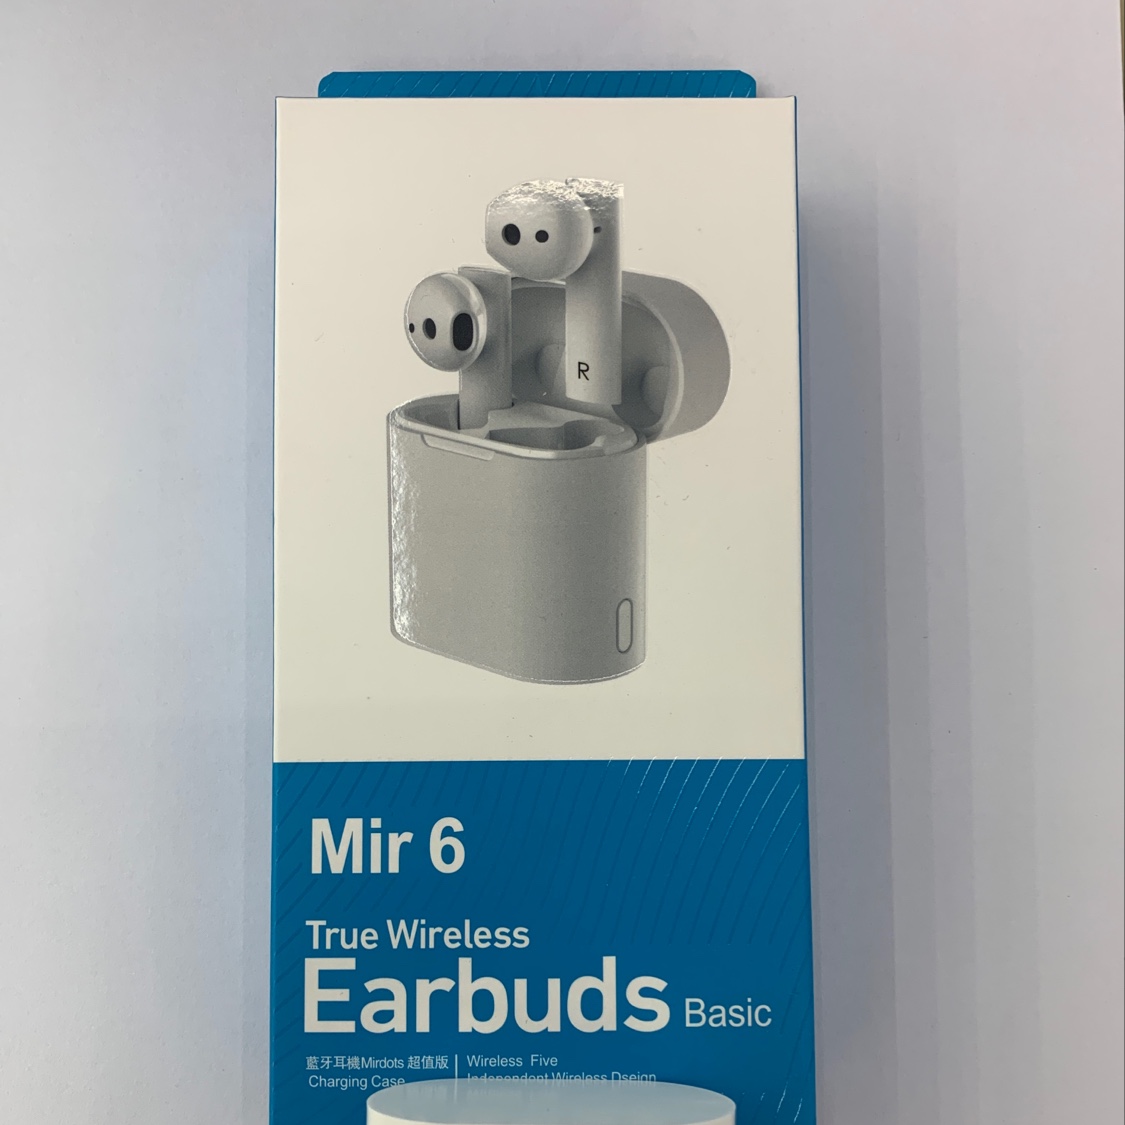 Mir 6蓝牙耳机图